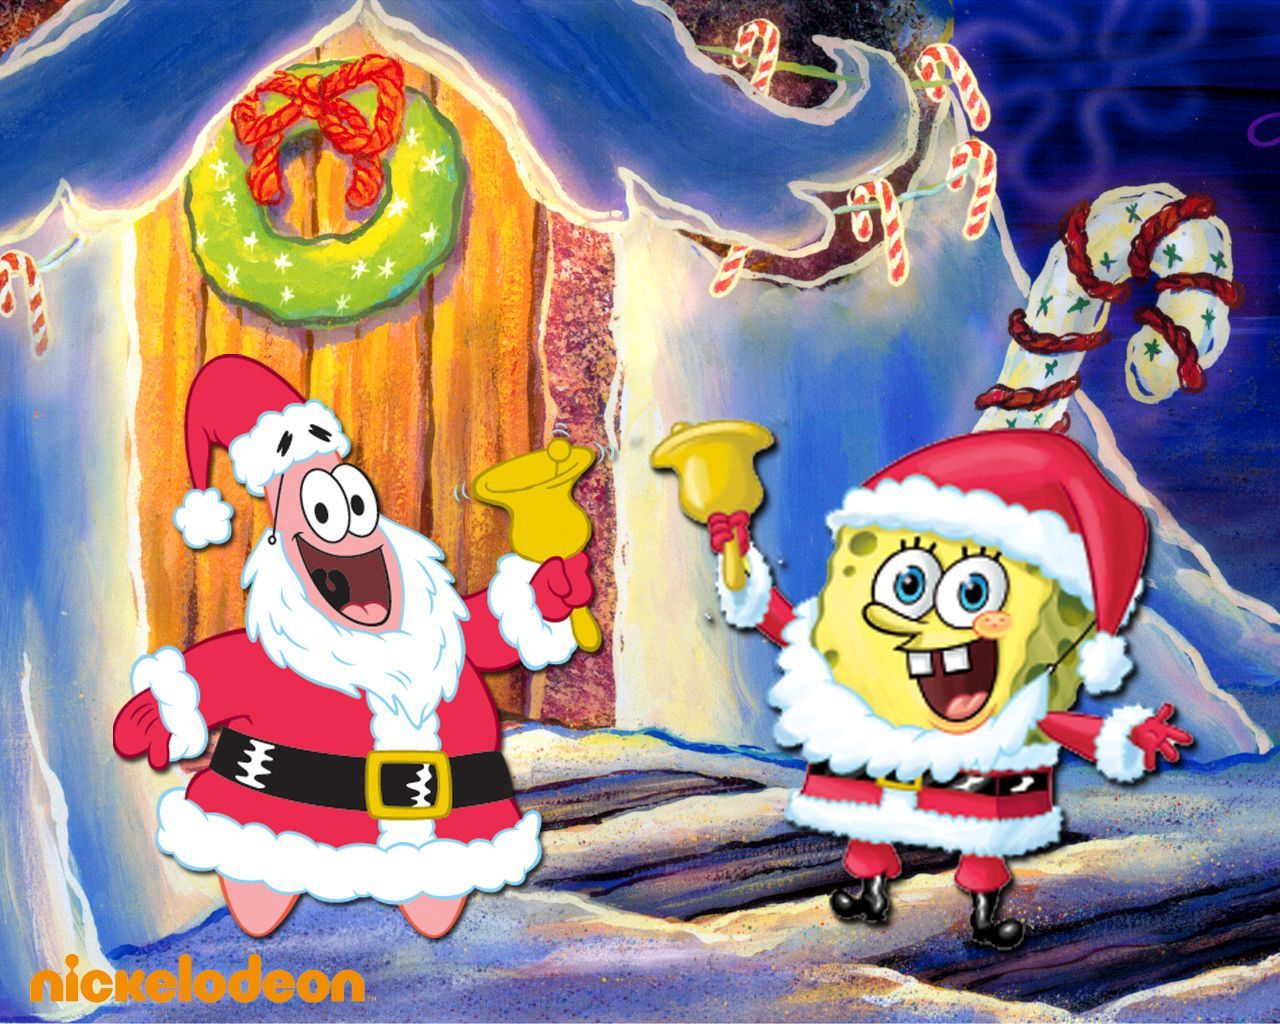 Spongebob Squarepants Wallpaper: Spongebob & Patrick. Spongebob christmas, Spongebob wallpaper, Cute christmas wallpaper